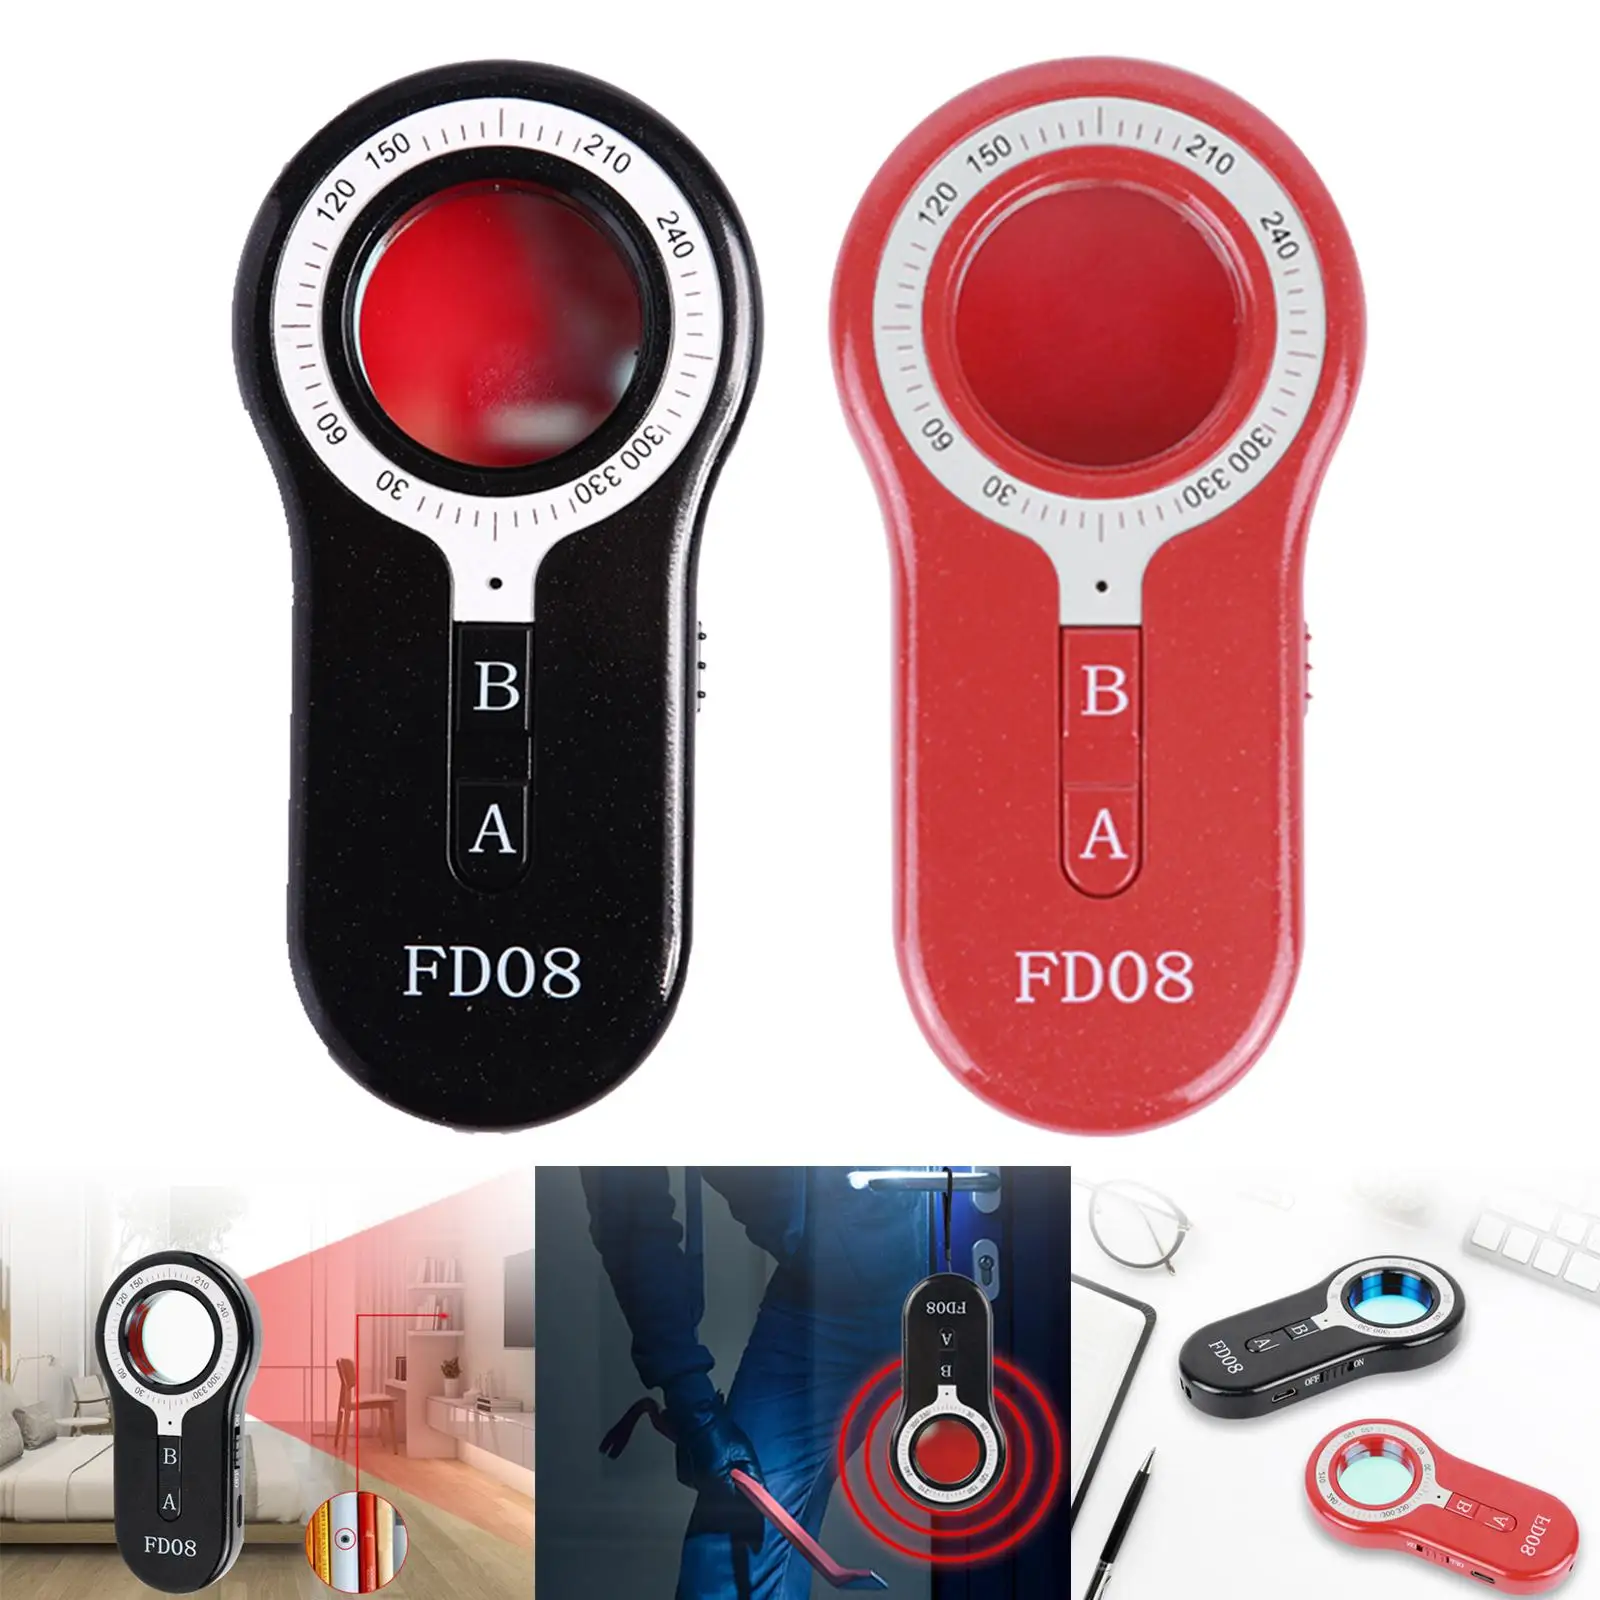 FD08 Wireless Detector Camera Multifunctional Infrared IR Scanner for Restrooms Alarm Emergency Alert Protection Vibration Alarm